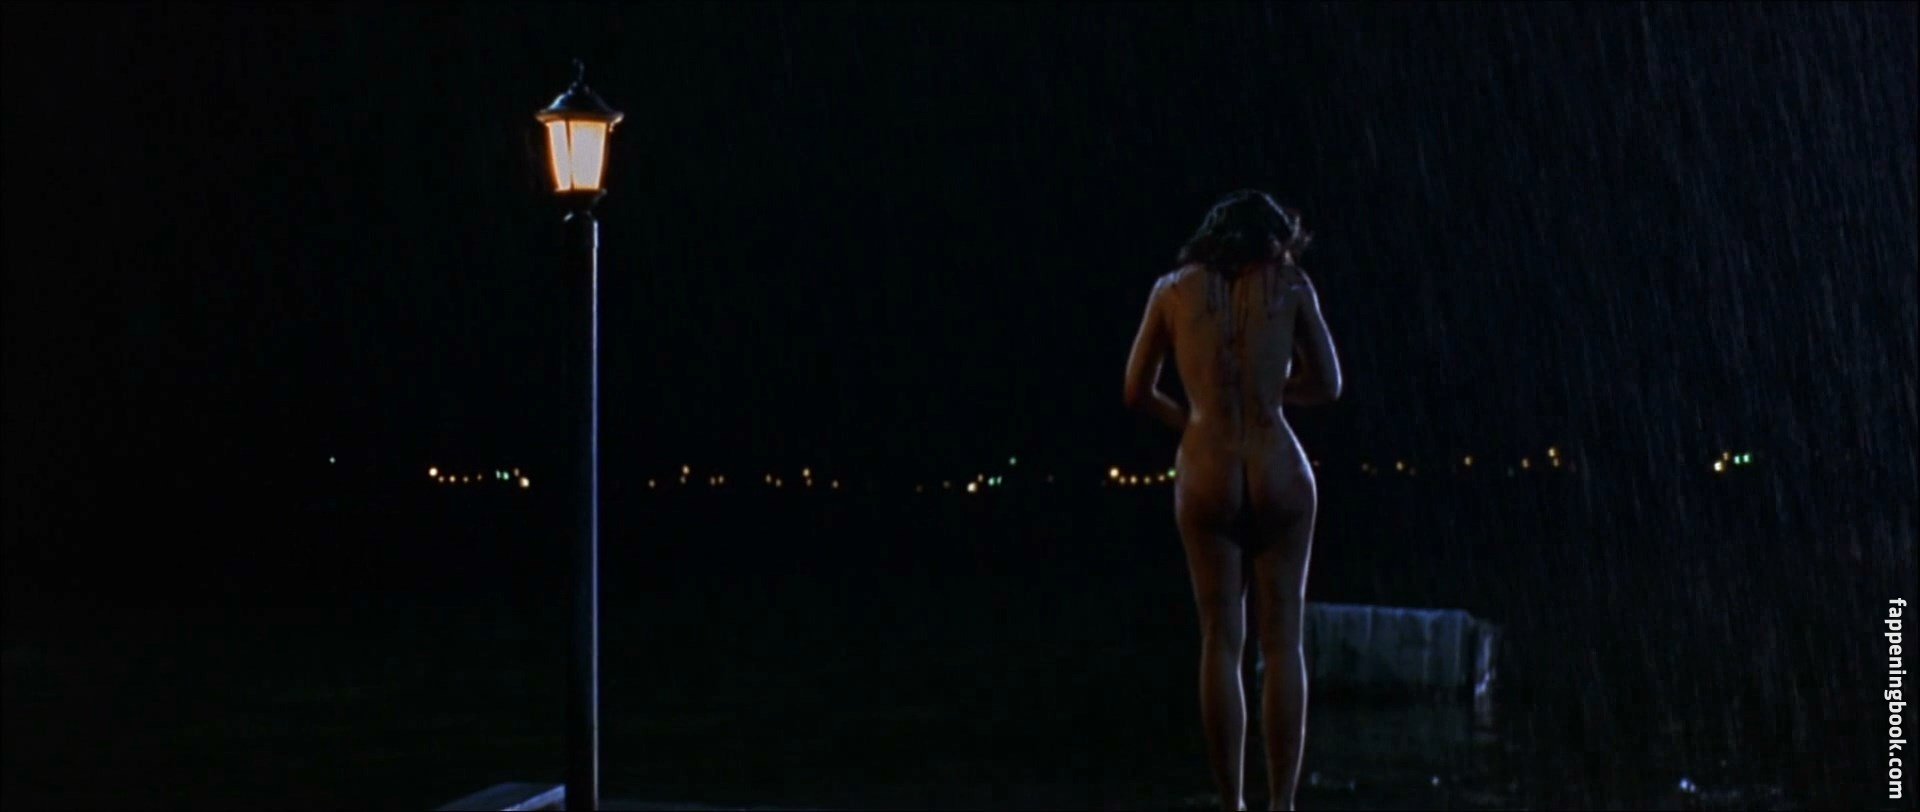 Ashley Judd Nude